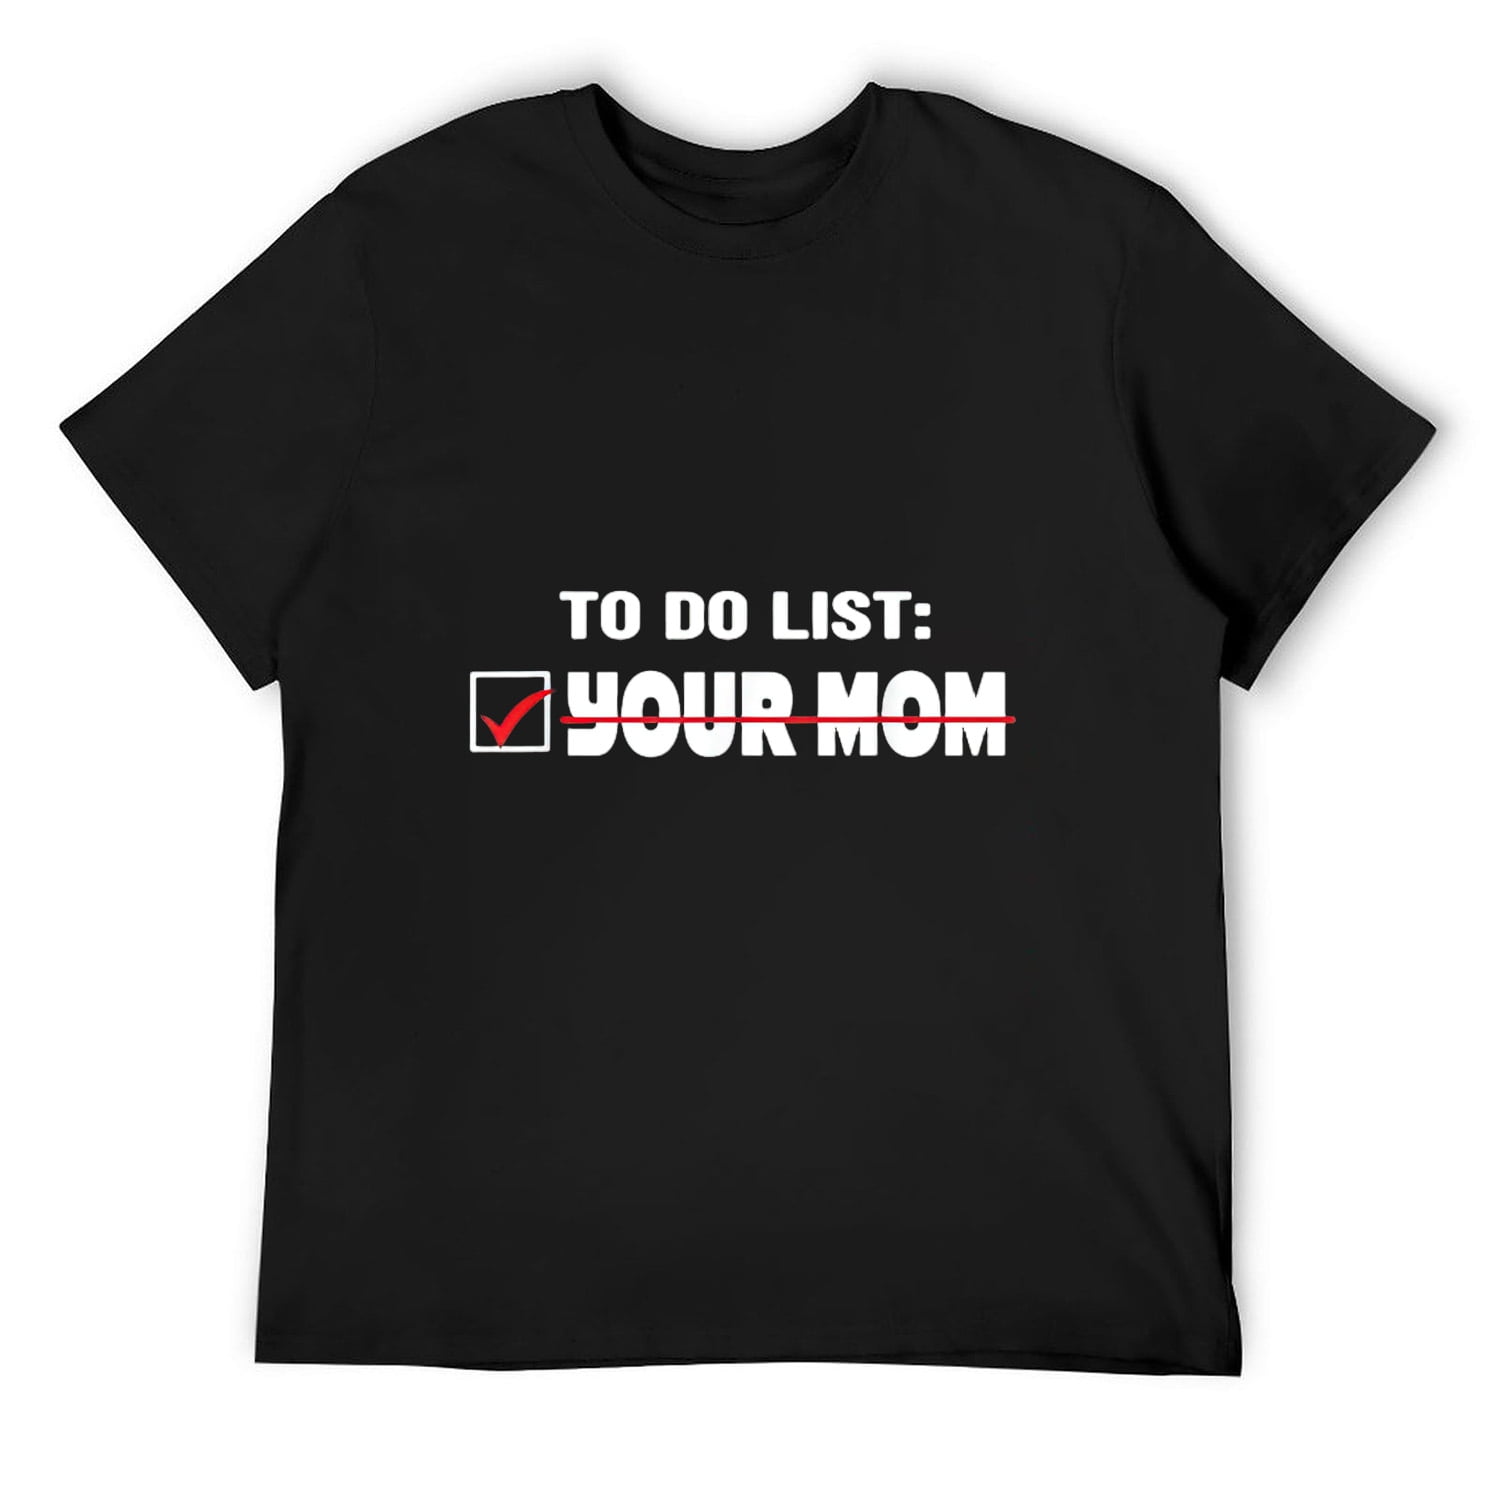 funny mom joke text design - adult joke - dad joke - prank T-Shirt ...